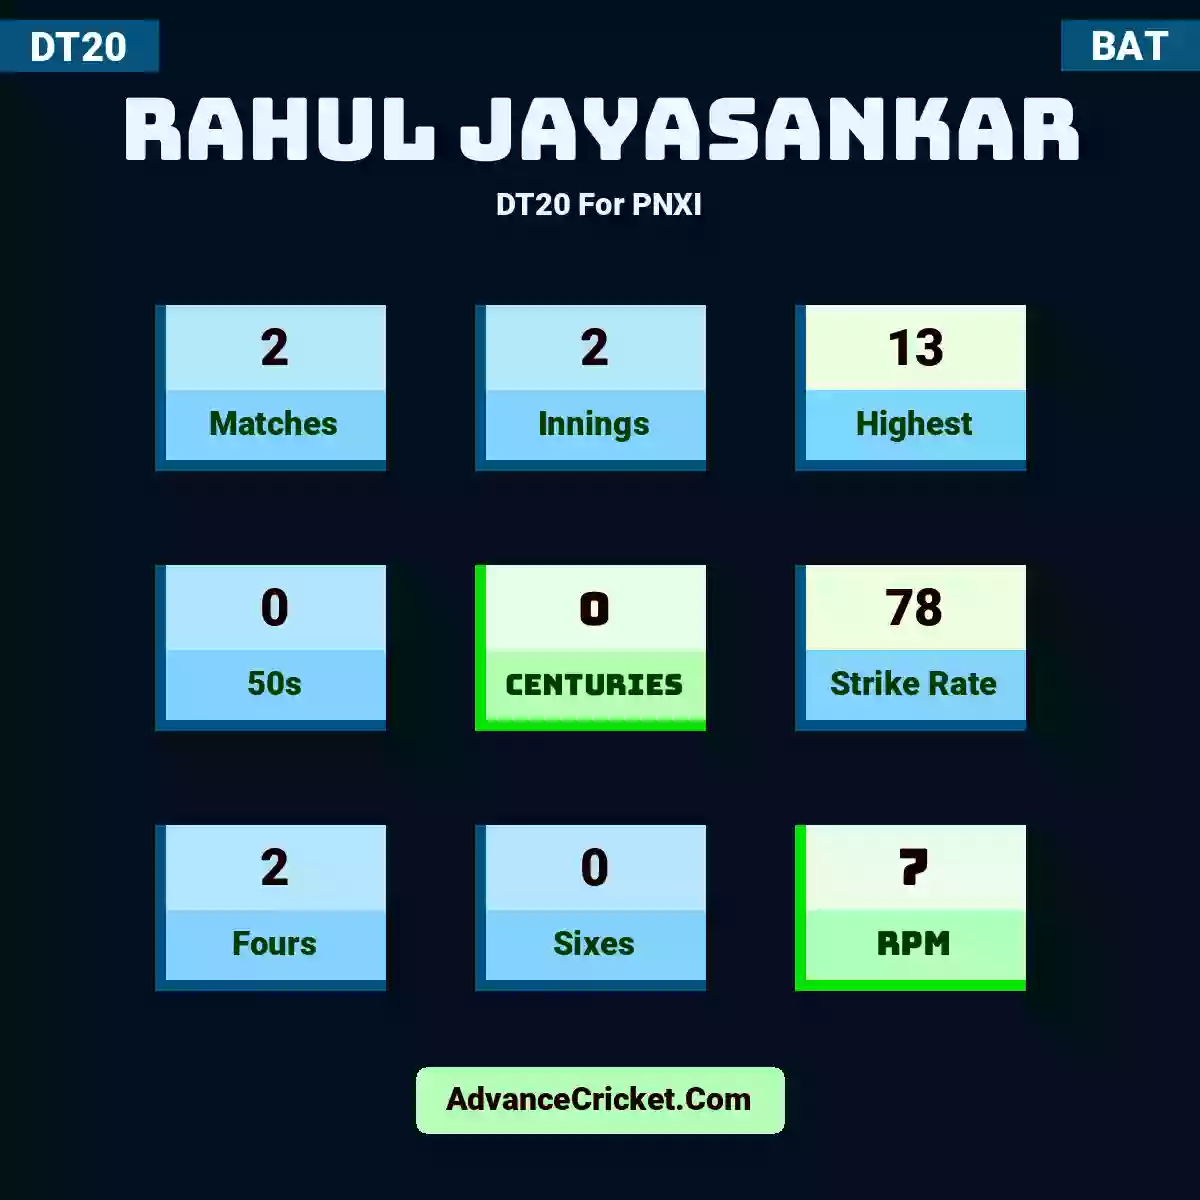 Rahul Jayasankar DT20  For PNXI, Rahul Jayasankar played 2 matches, scored 13 runs as highest, 0 half-centuries, and 0 centuries, with a strike rate of 78. R.Jayasankar hit 2 fours and 0 sixes, with an RPM of 7.